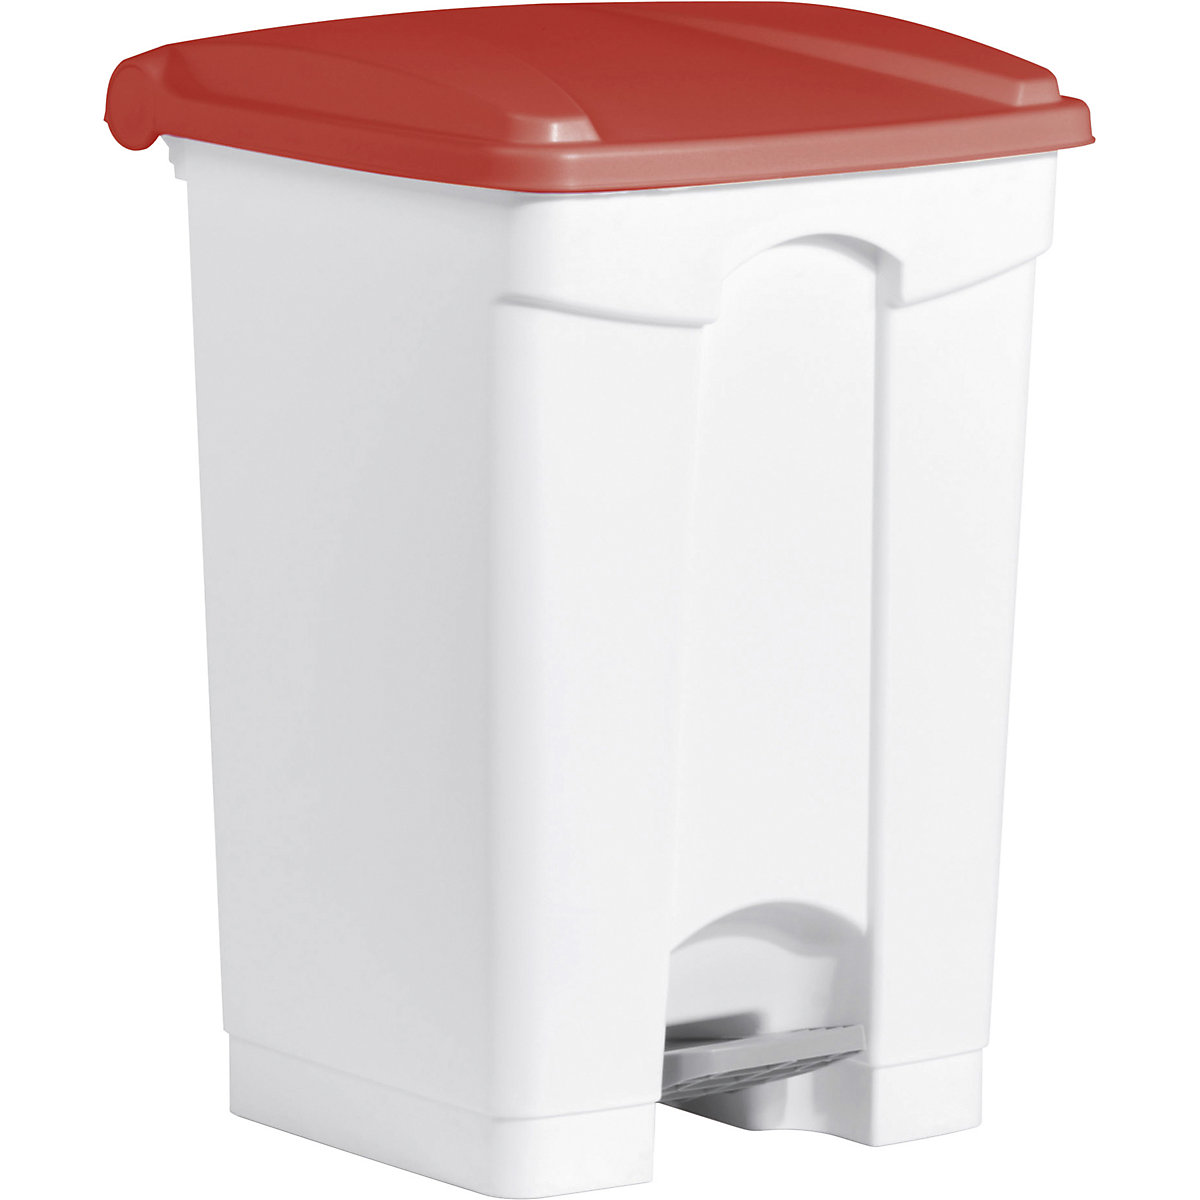 Pedal bin – helit, capacity 45 l, WxHxD 410 x 605 x 400 mm, white, red lid-7